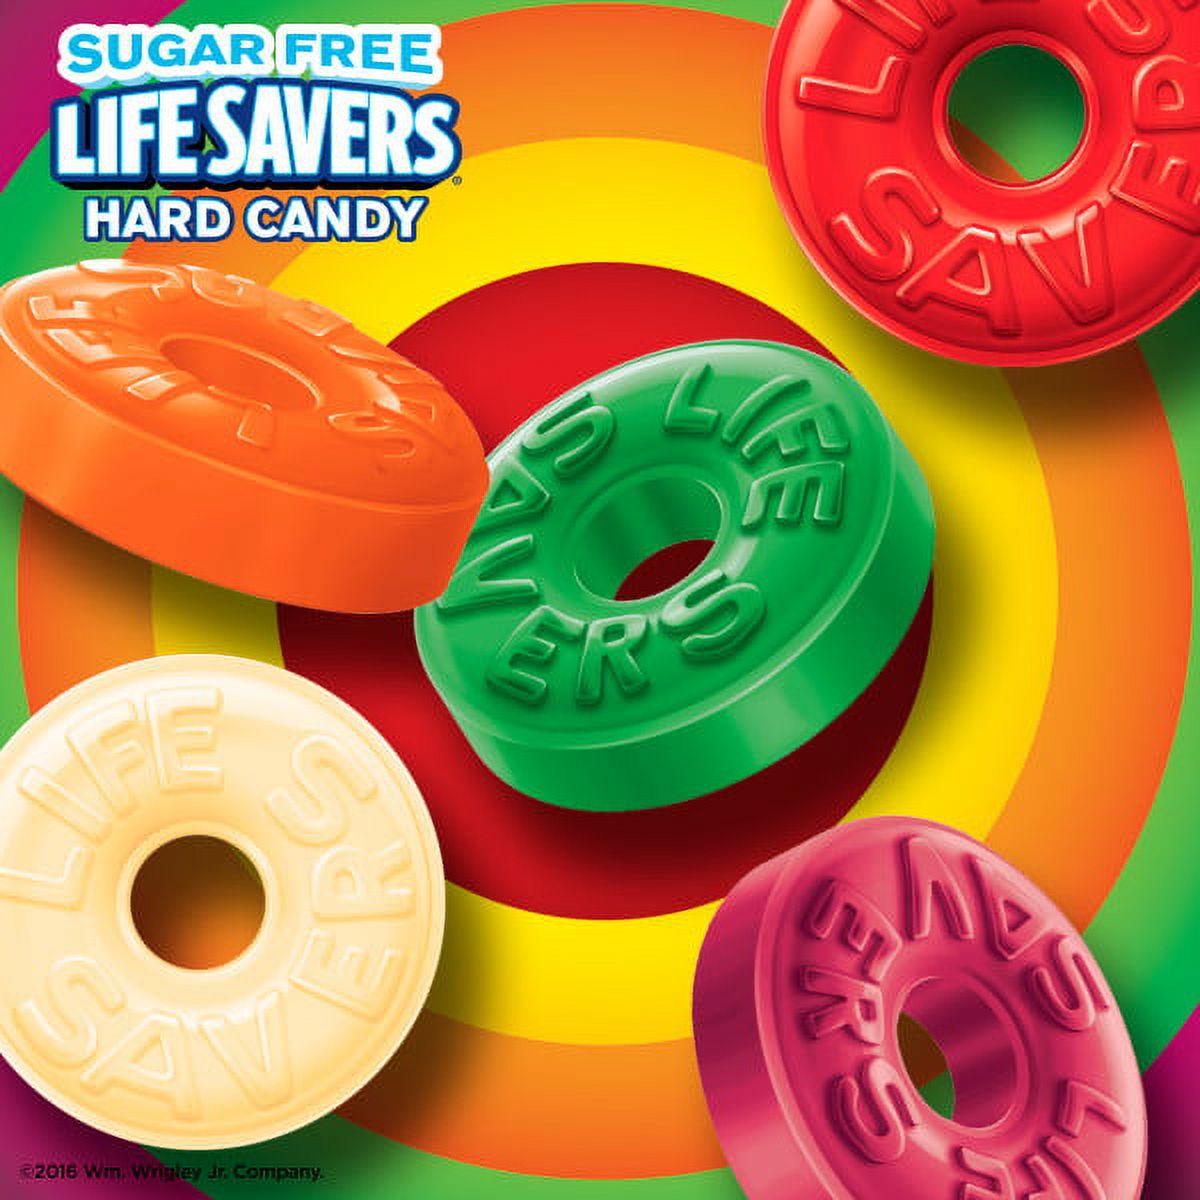 Life Savers, Sugar Free 5 Flavors Hard Candy Bag, 2.75 Ounce - image 2 of 5